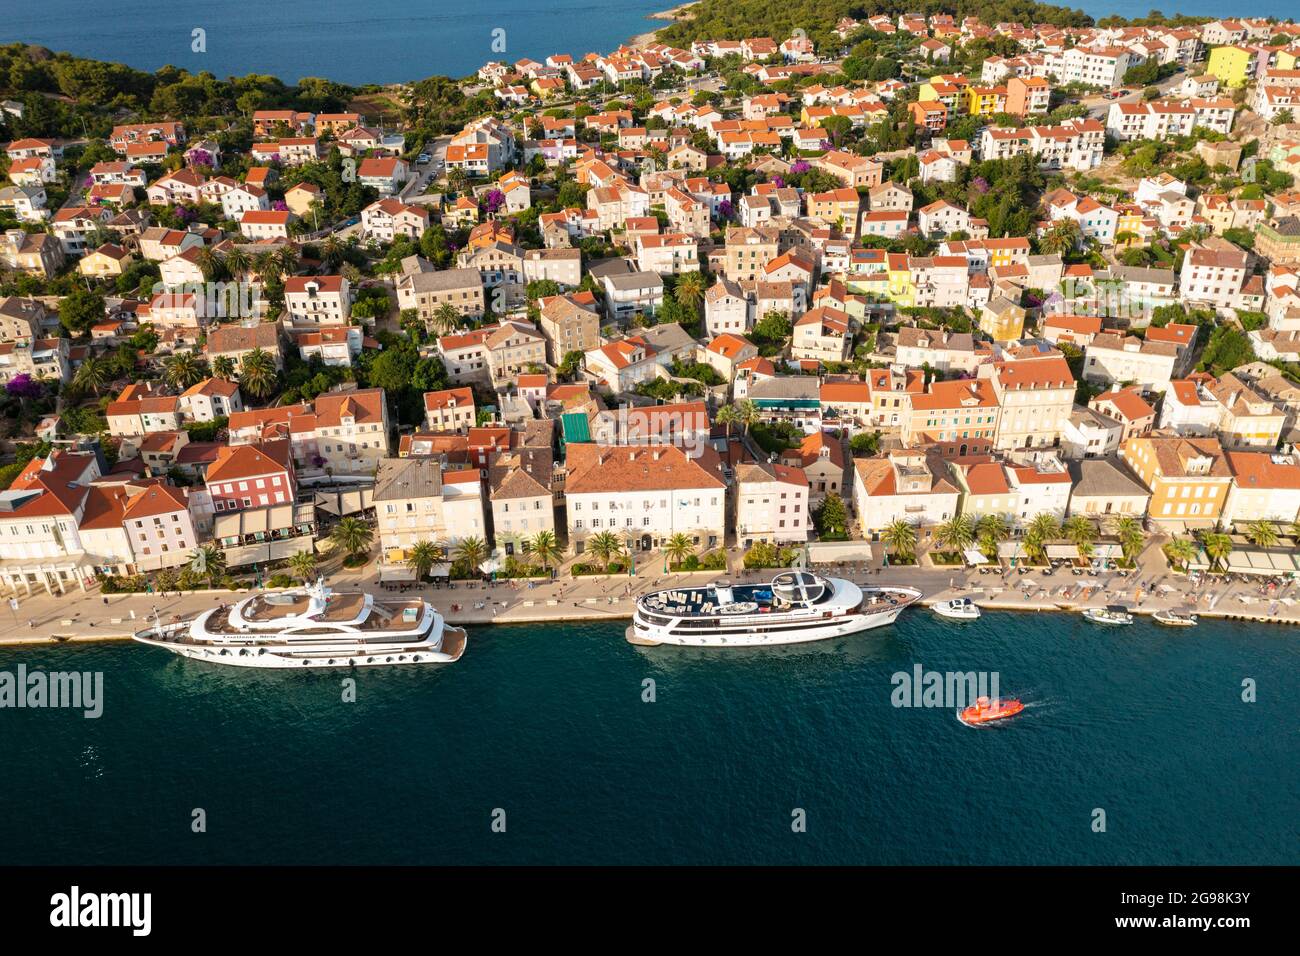 Vue aérienne de la ville de Mali Losinj sur l'île de Losinj, la mer Adriatique en Croatie Banque D'Images